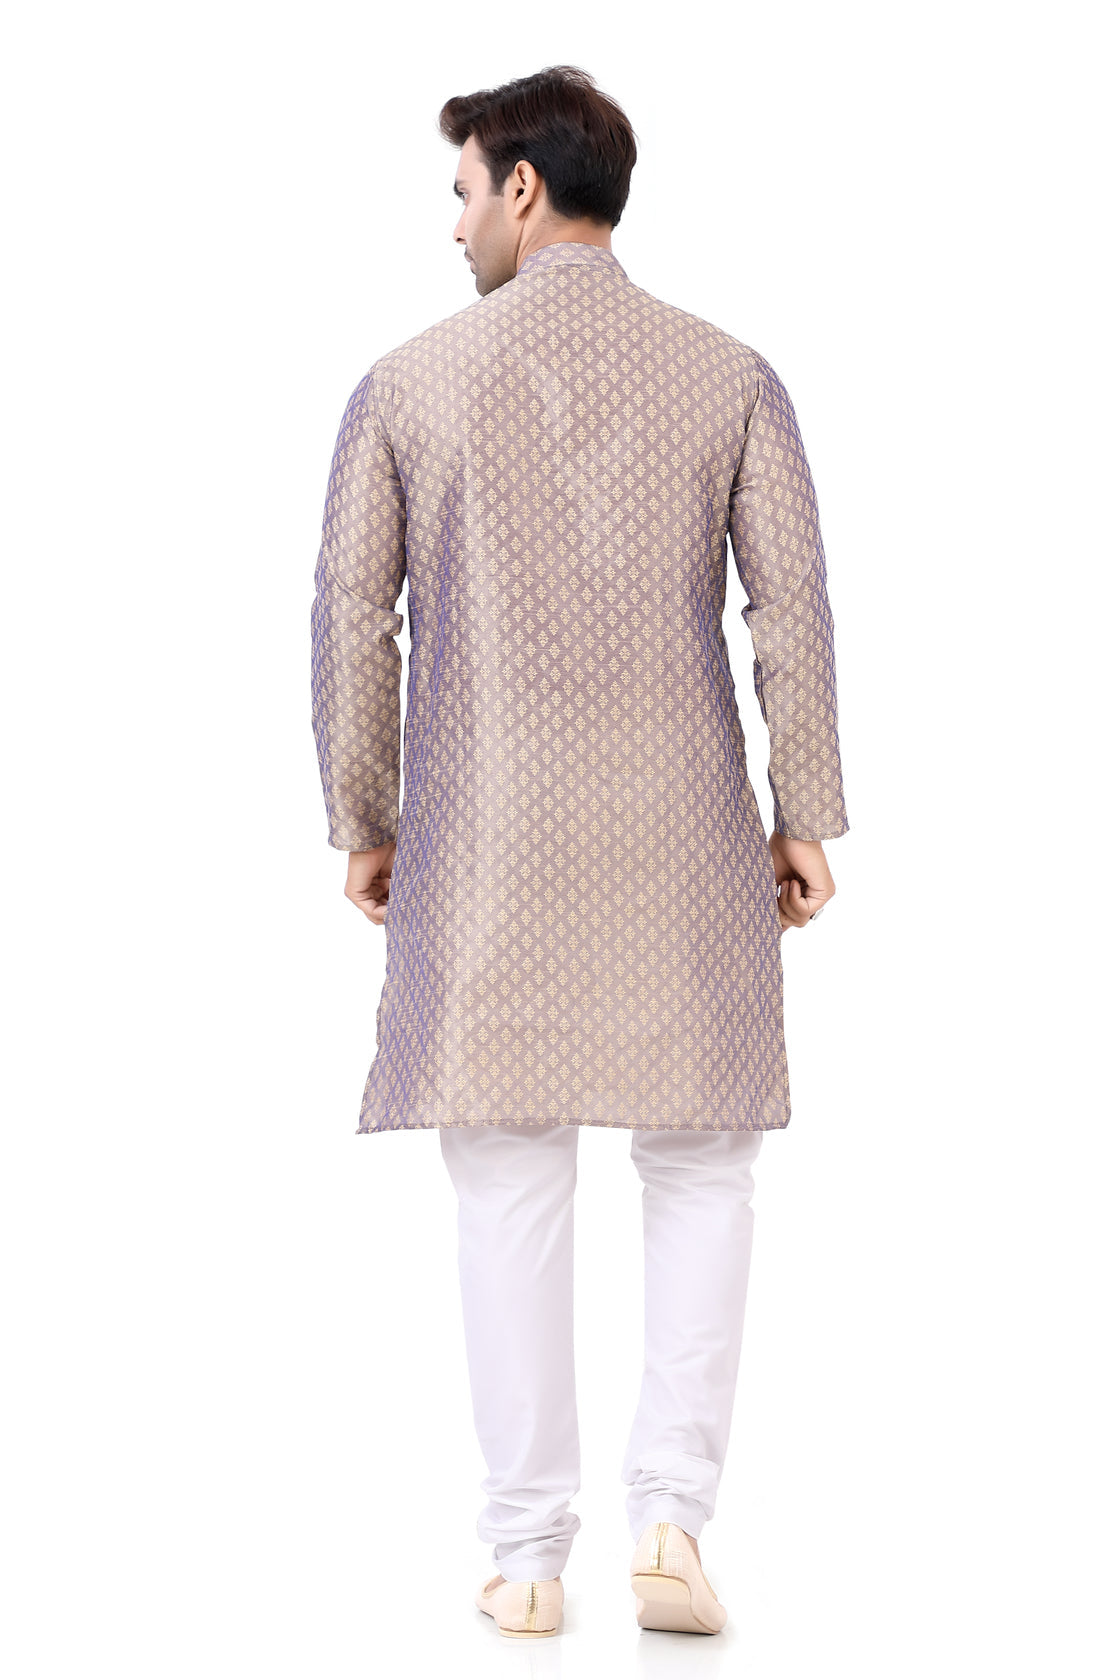 Plus size Self Jacquard Kurta pajama set in Light purple - Premium kurta pajama from Dapper Ethnic - Just $49! Shop now at Dulhan Exclusives